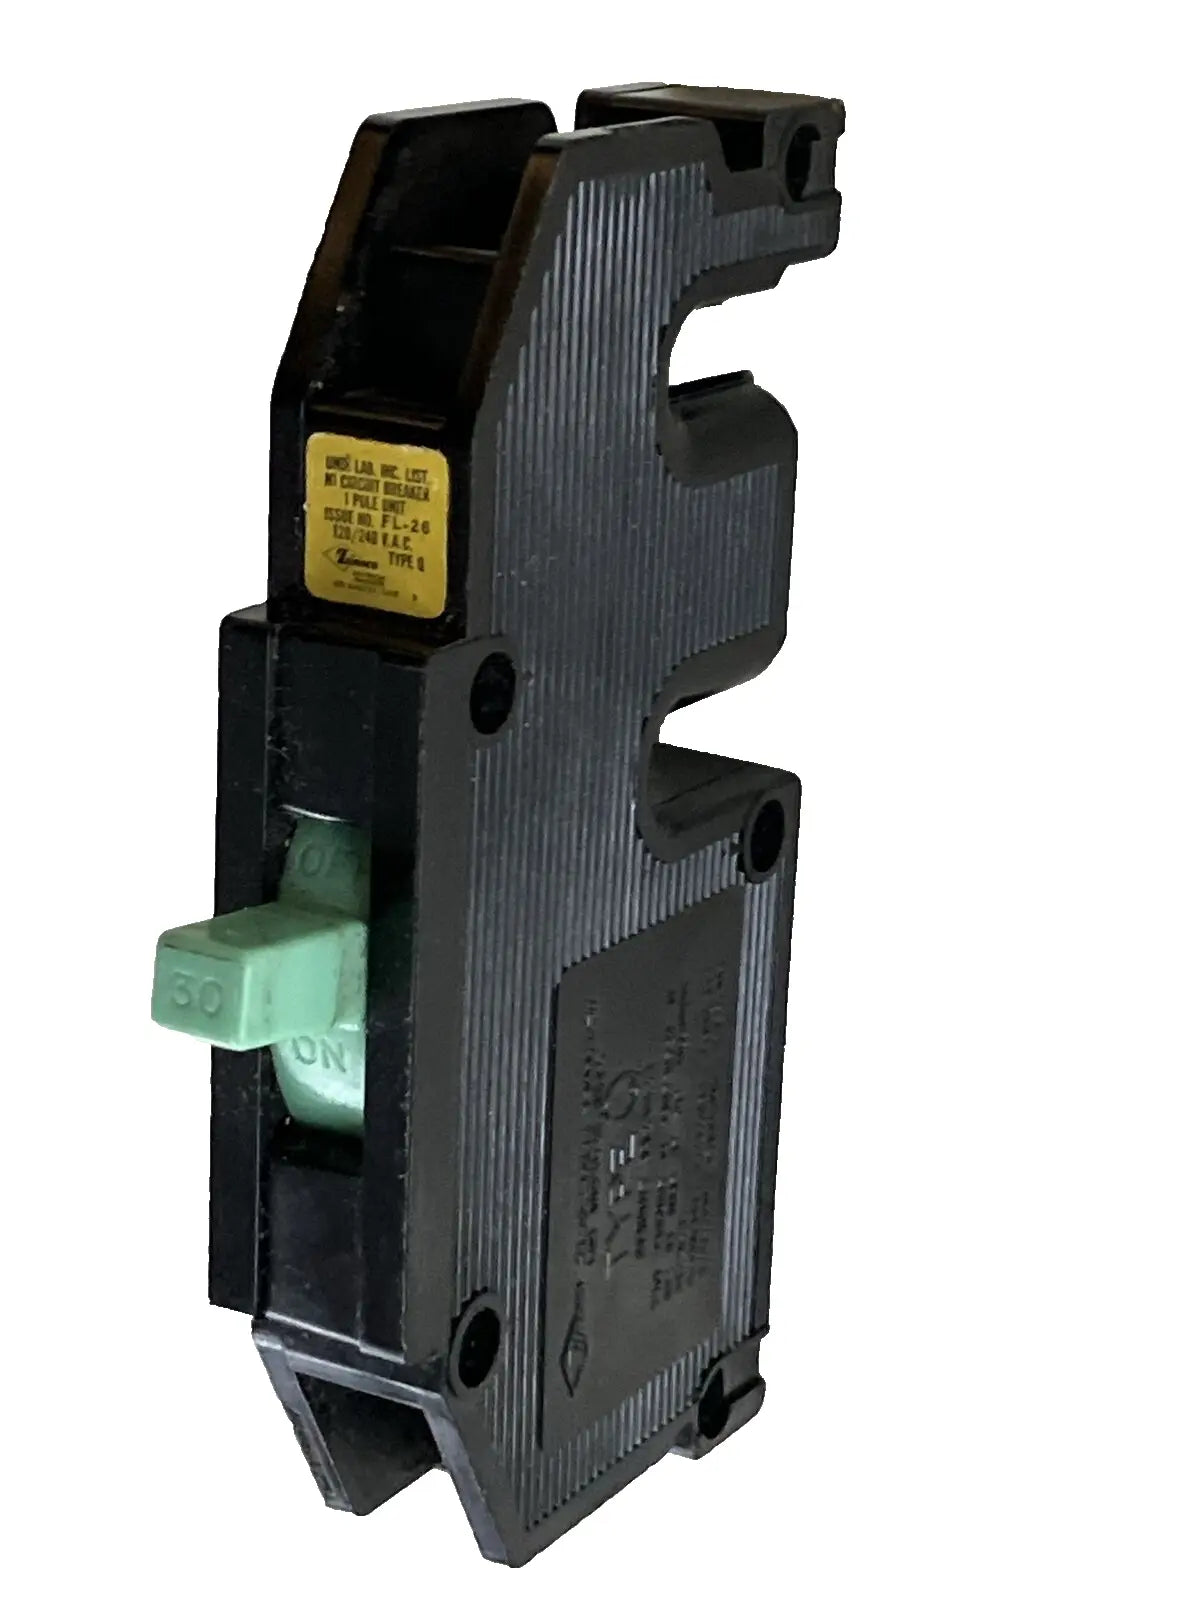 Zinsco Q-30 1-Pole 30-Amp Circuit Breaker - Used